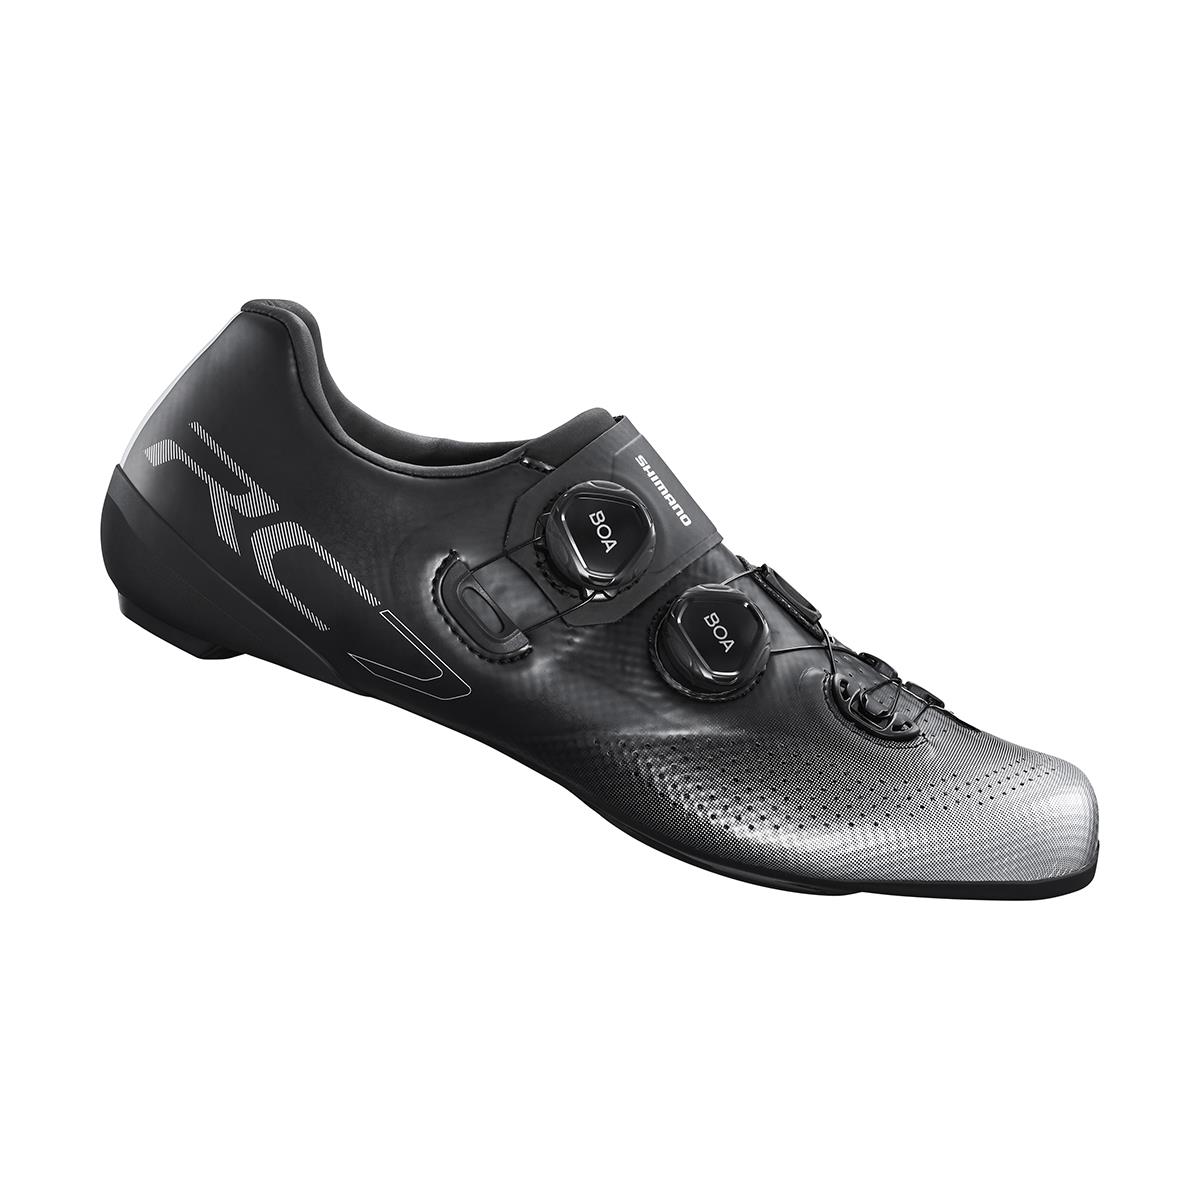 Road Shoes RC7 SH-RC702 black size 38